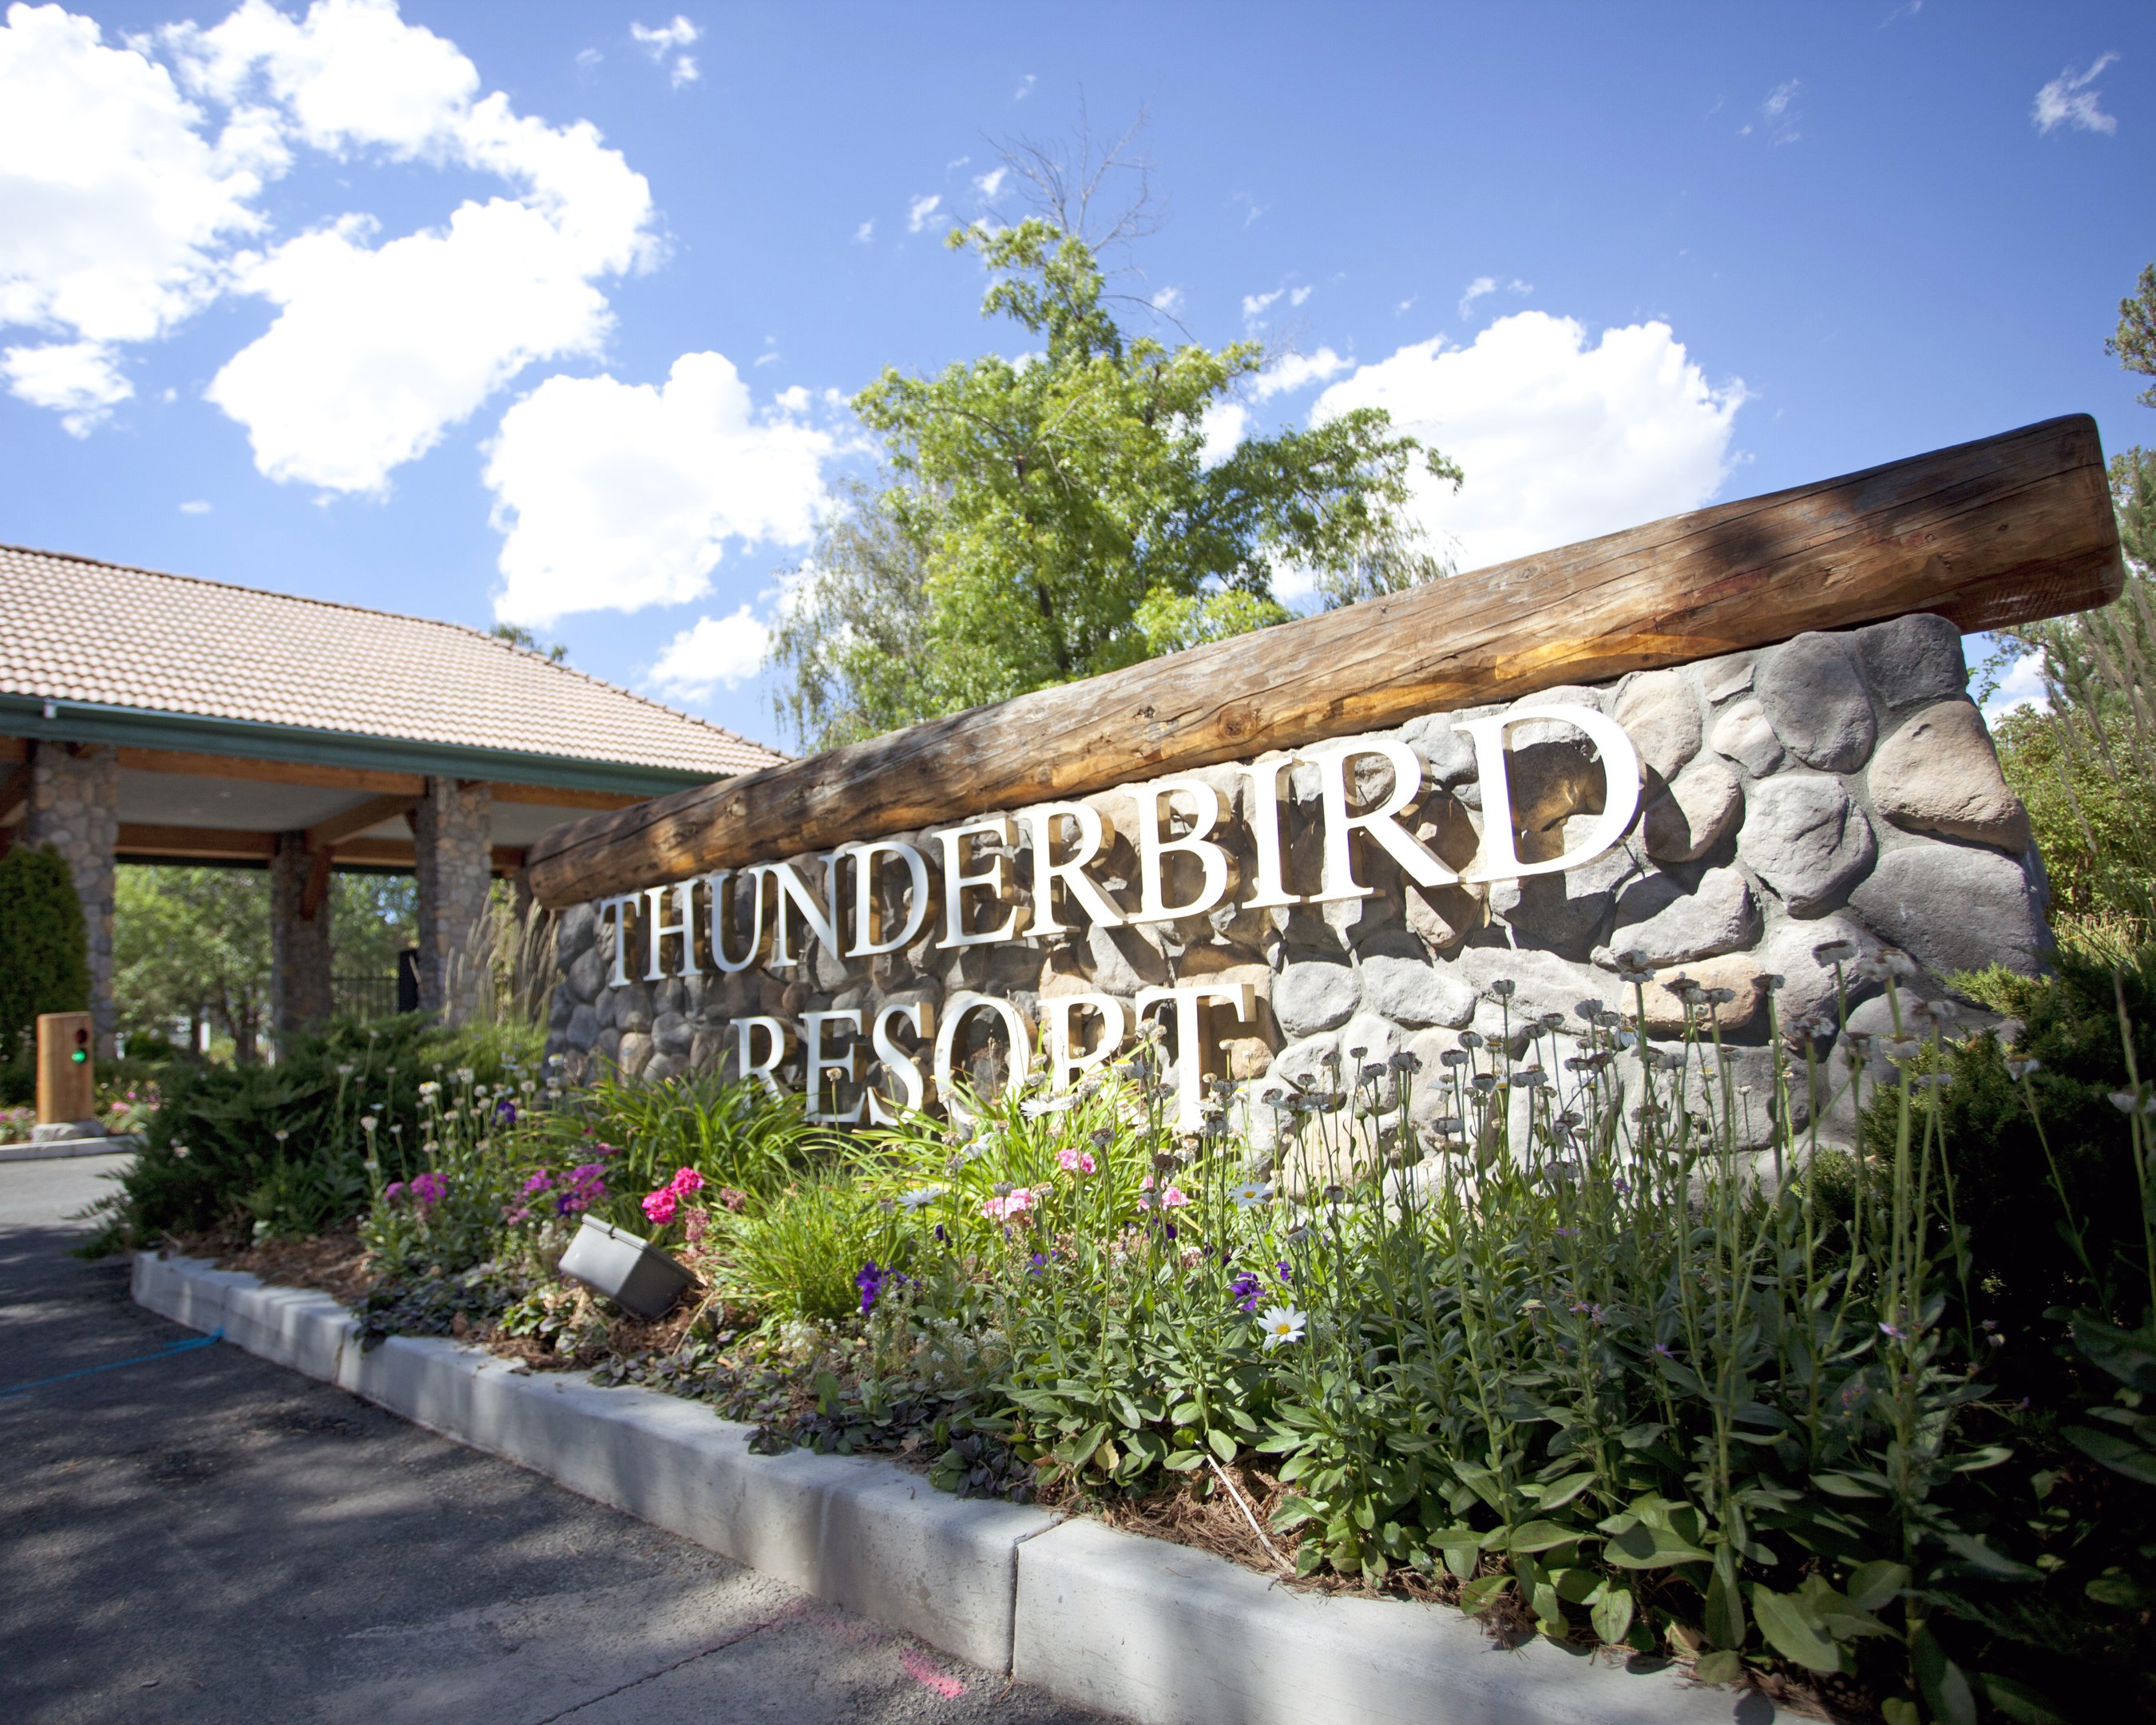 Thunderbird Resort Club image